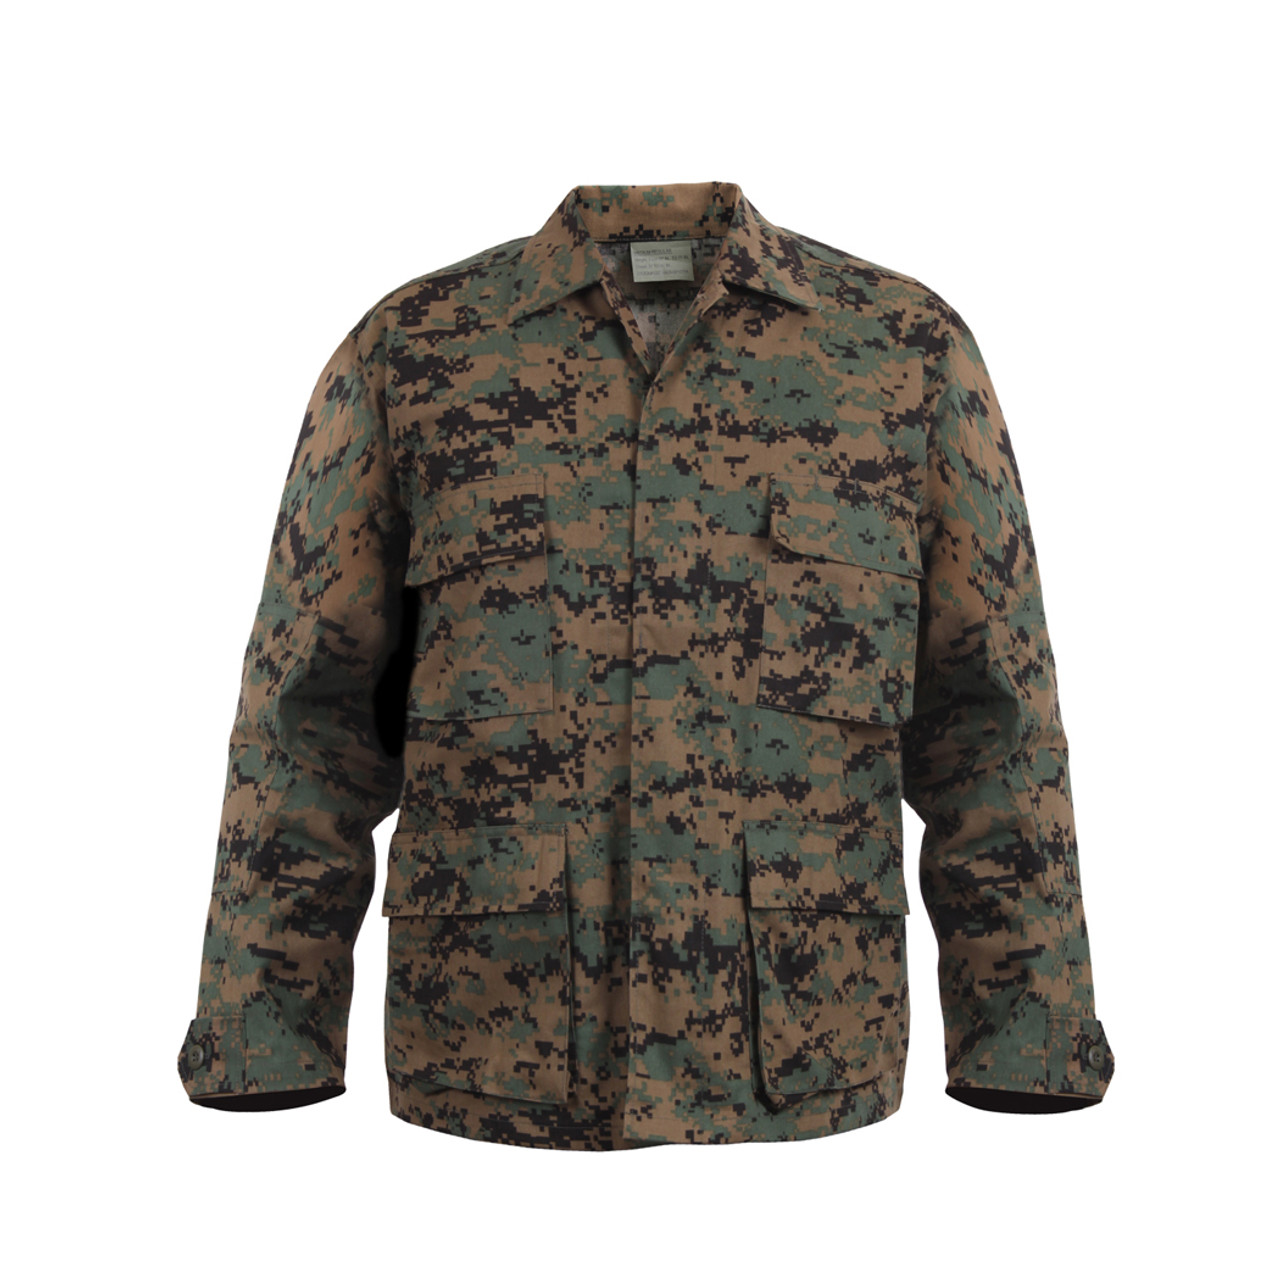 Shop Woodland Digital Camo BDU Jacket - Fatigues Army Navy Gear